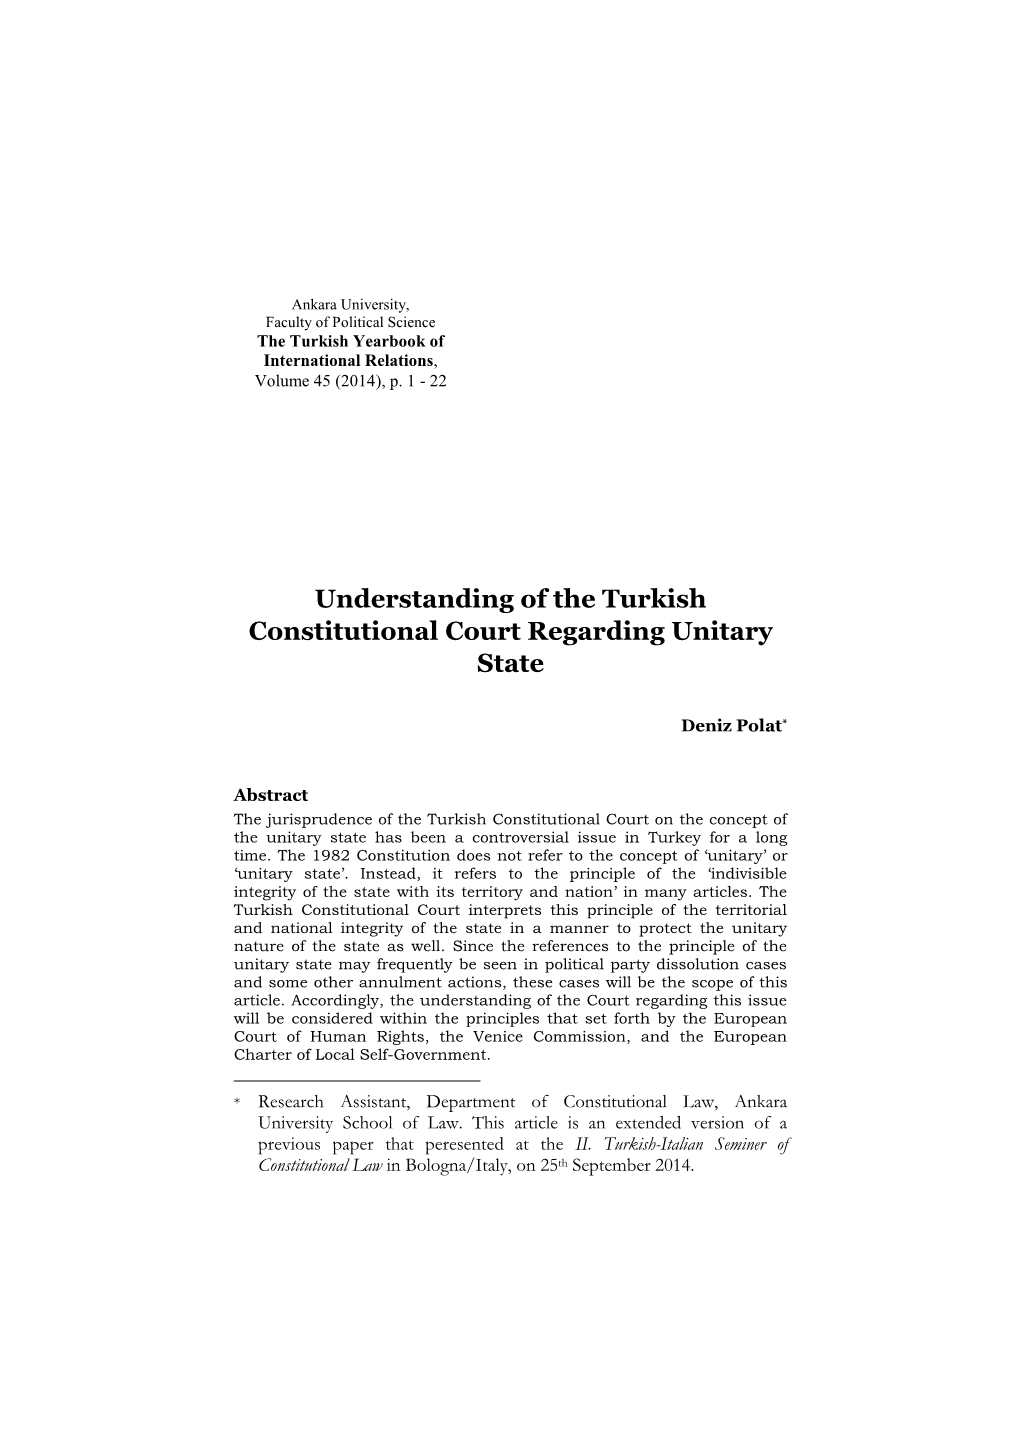 Understanding of the Turkish Constitutional Court Regarding Unitary State